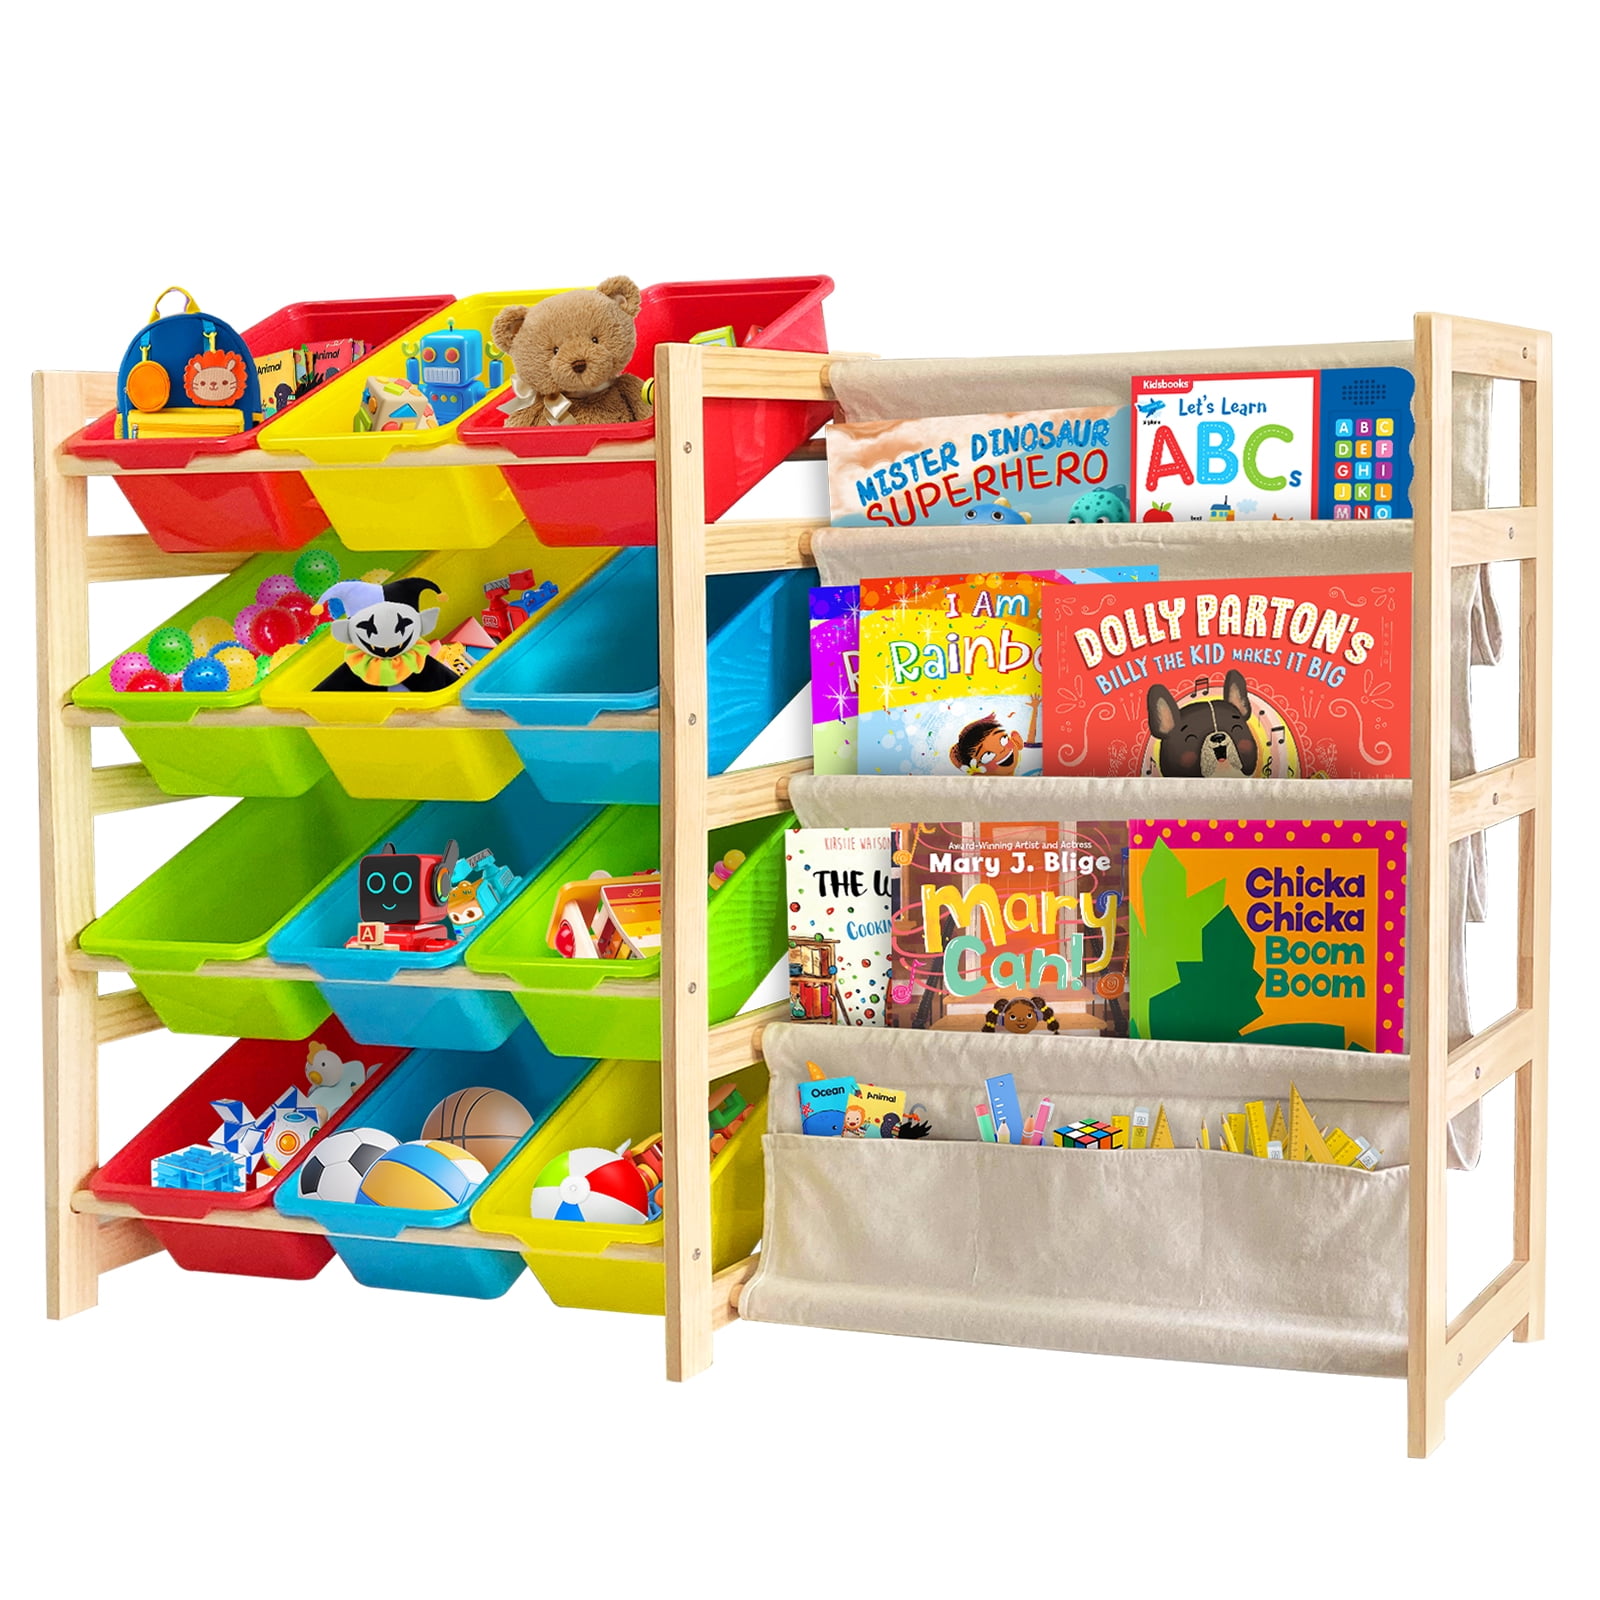 Yaoping Kids Toy Storage Organizer for Kids Room Organizers and Storage, 3 Storage Bins and Open Shelf for Playroom Storage(White-40 inch)